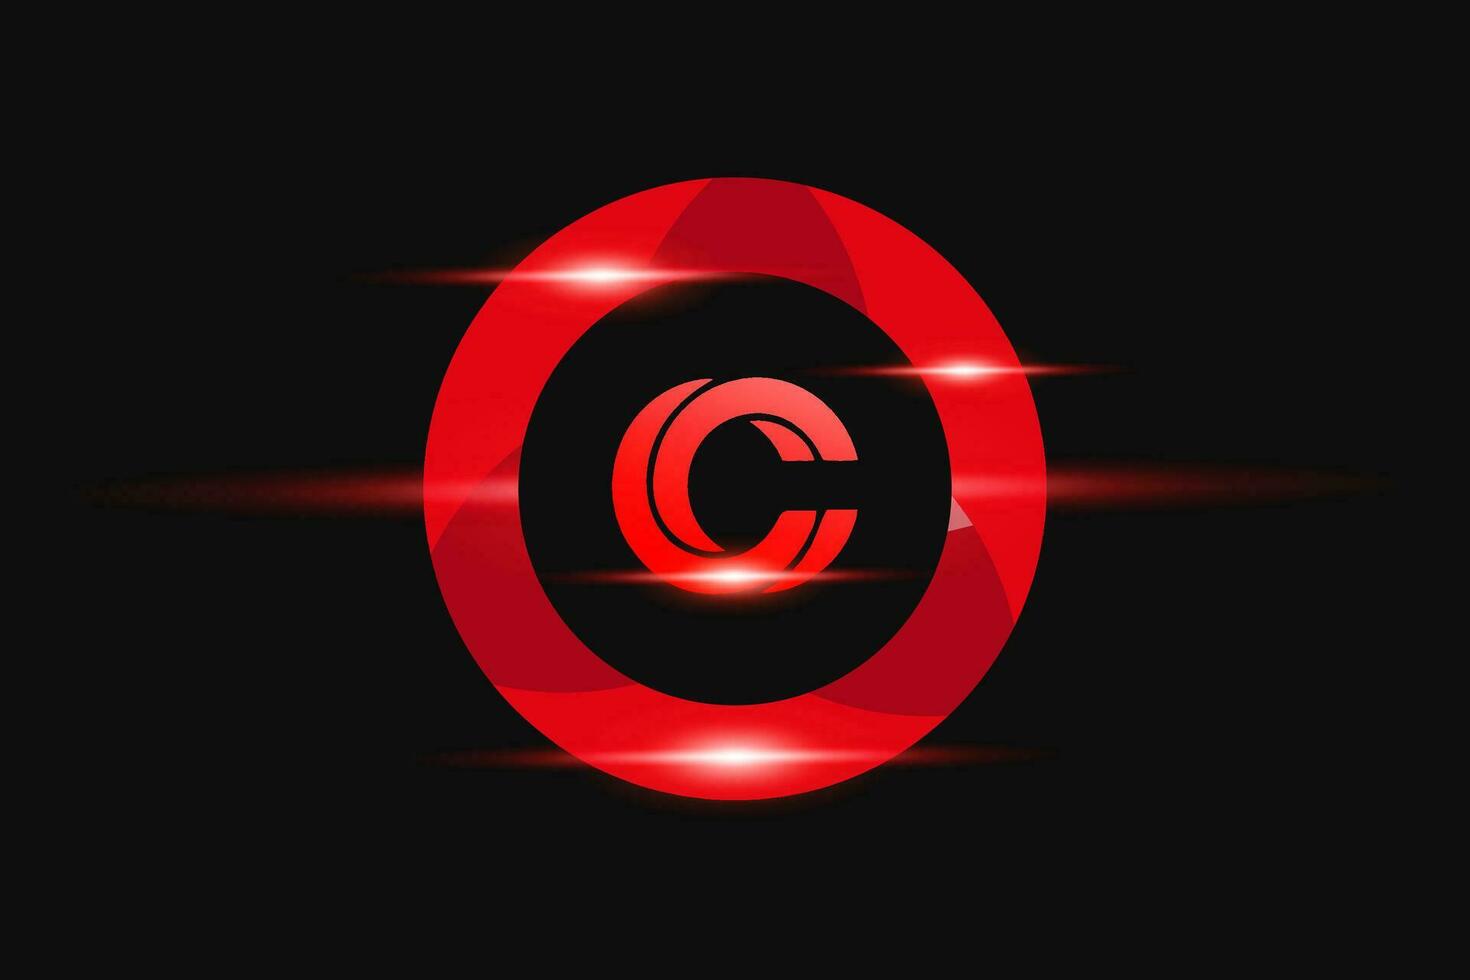 CC Red logo Design. Vector logo design for business.